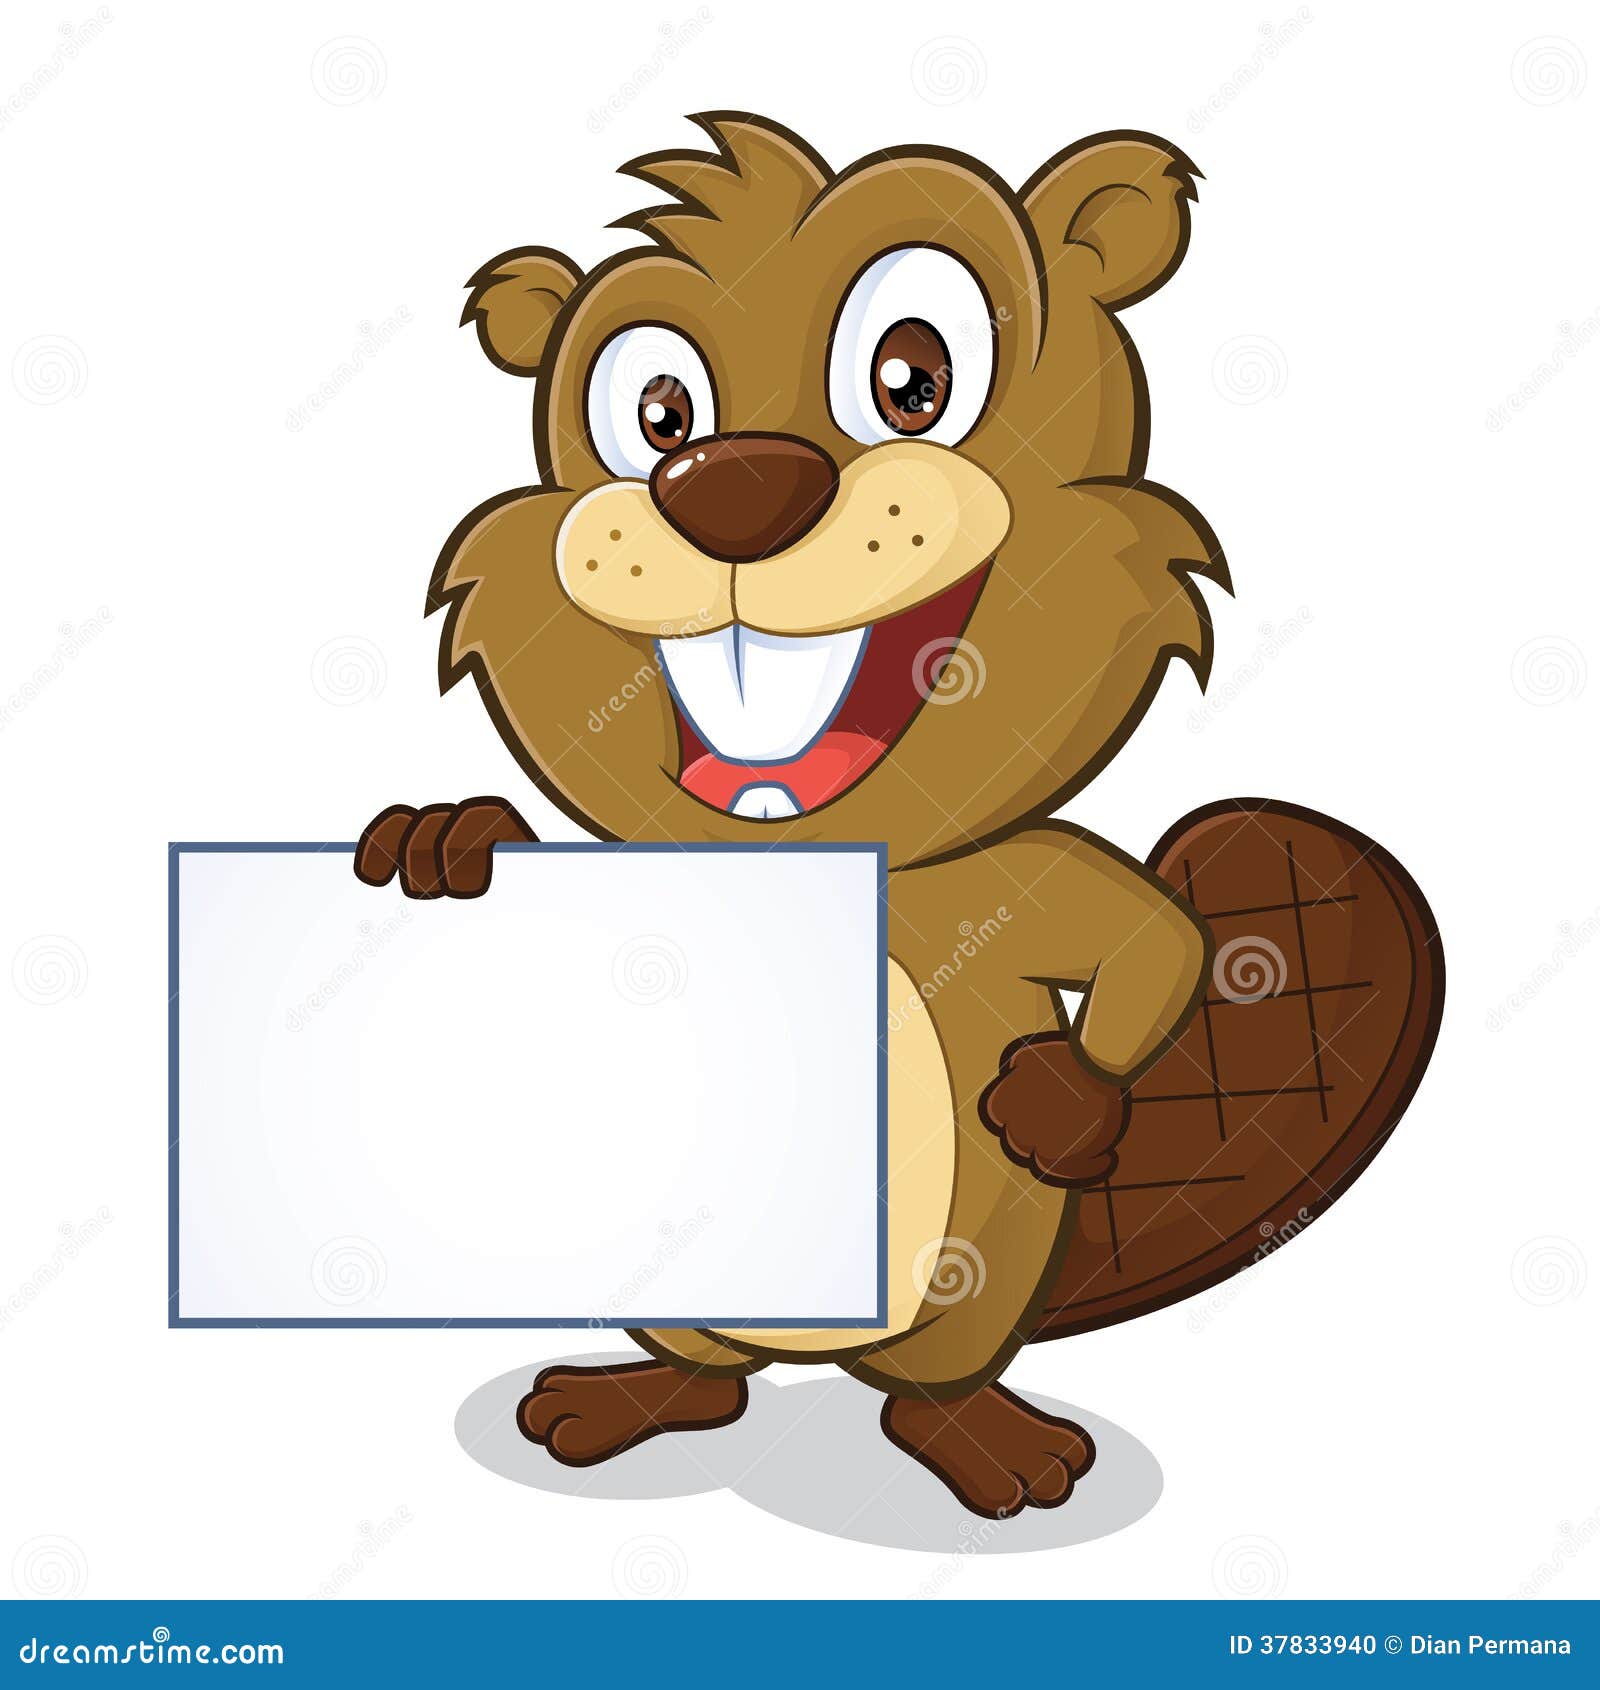 Beaver holding sign stock vector. Illustration of cartoon - 37833940